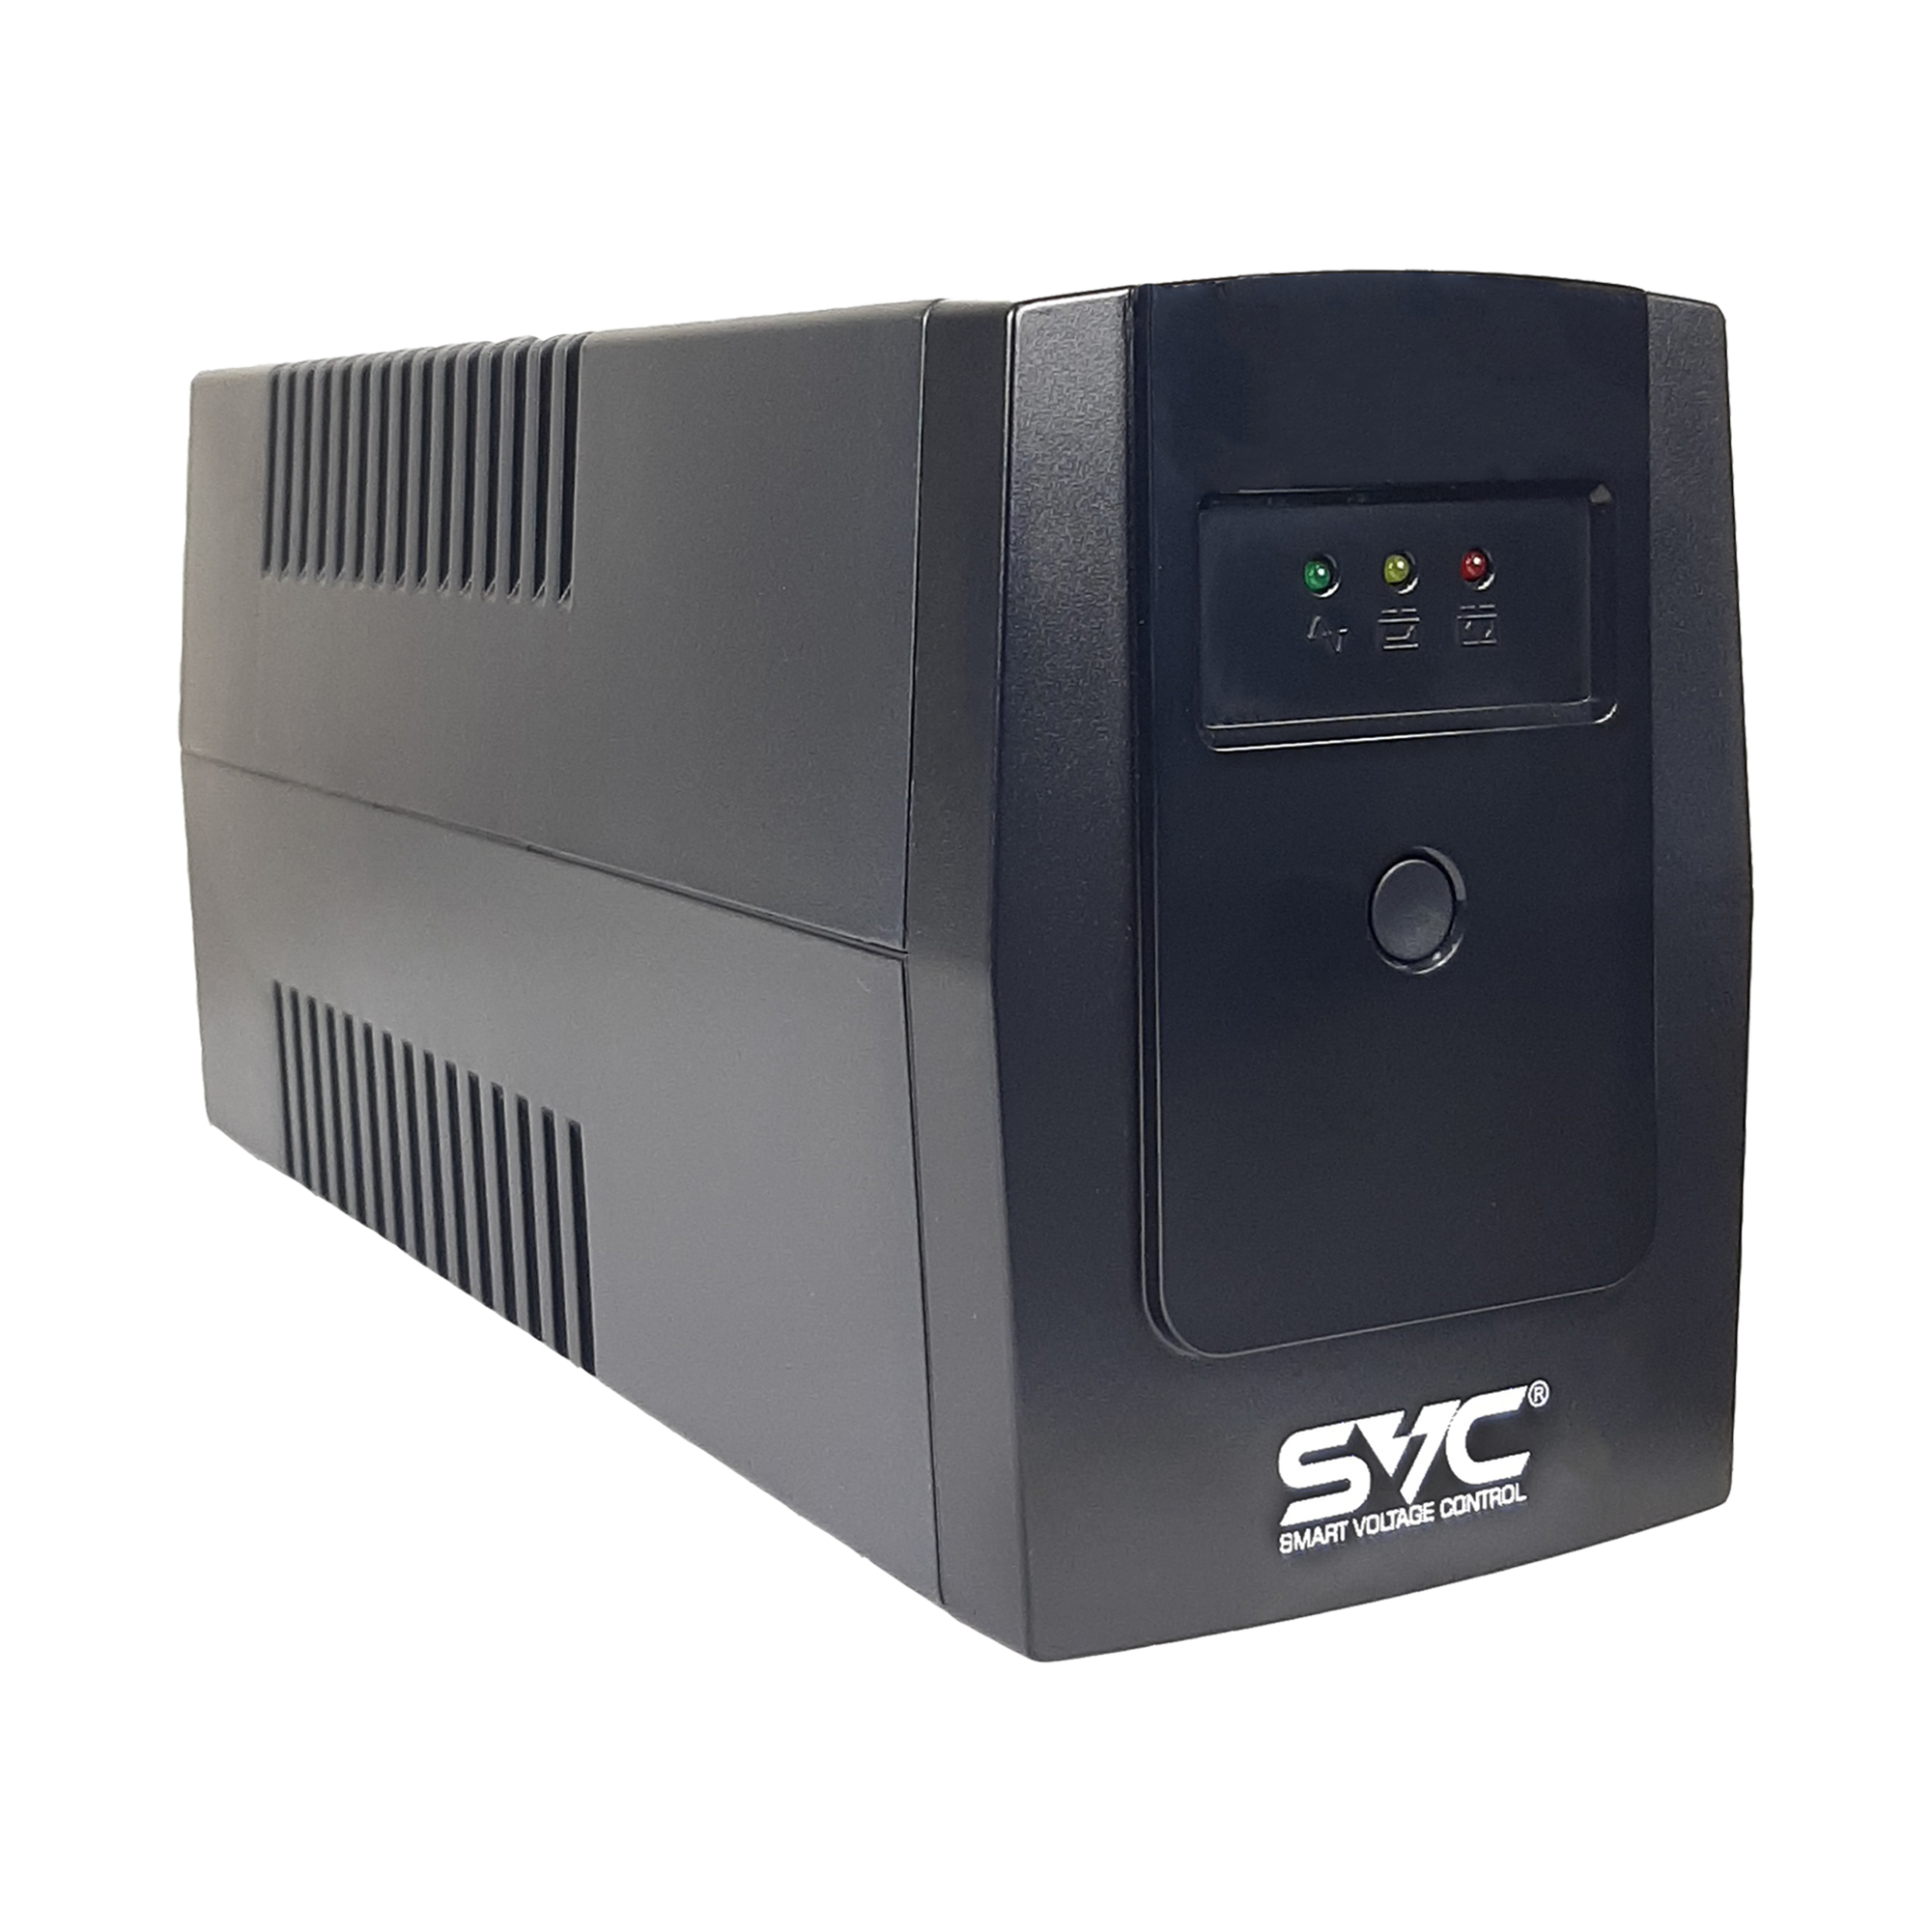 ИБП SVC V-800-R/USB, 800 VA, 480 Вт, EURO, розеток - 2, USB, черный (V-800-R/USB)